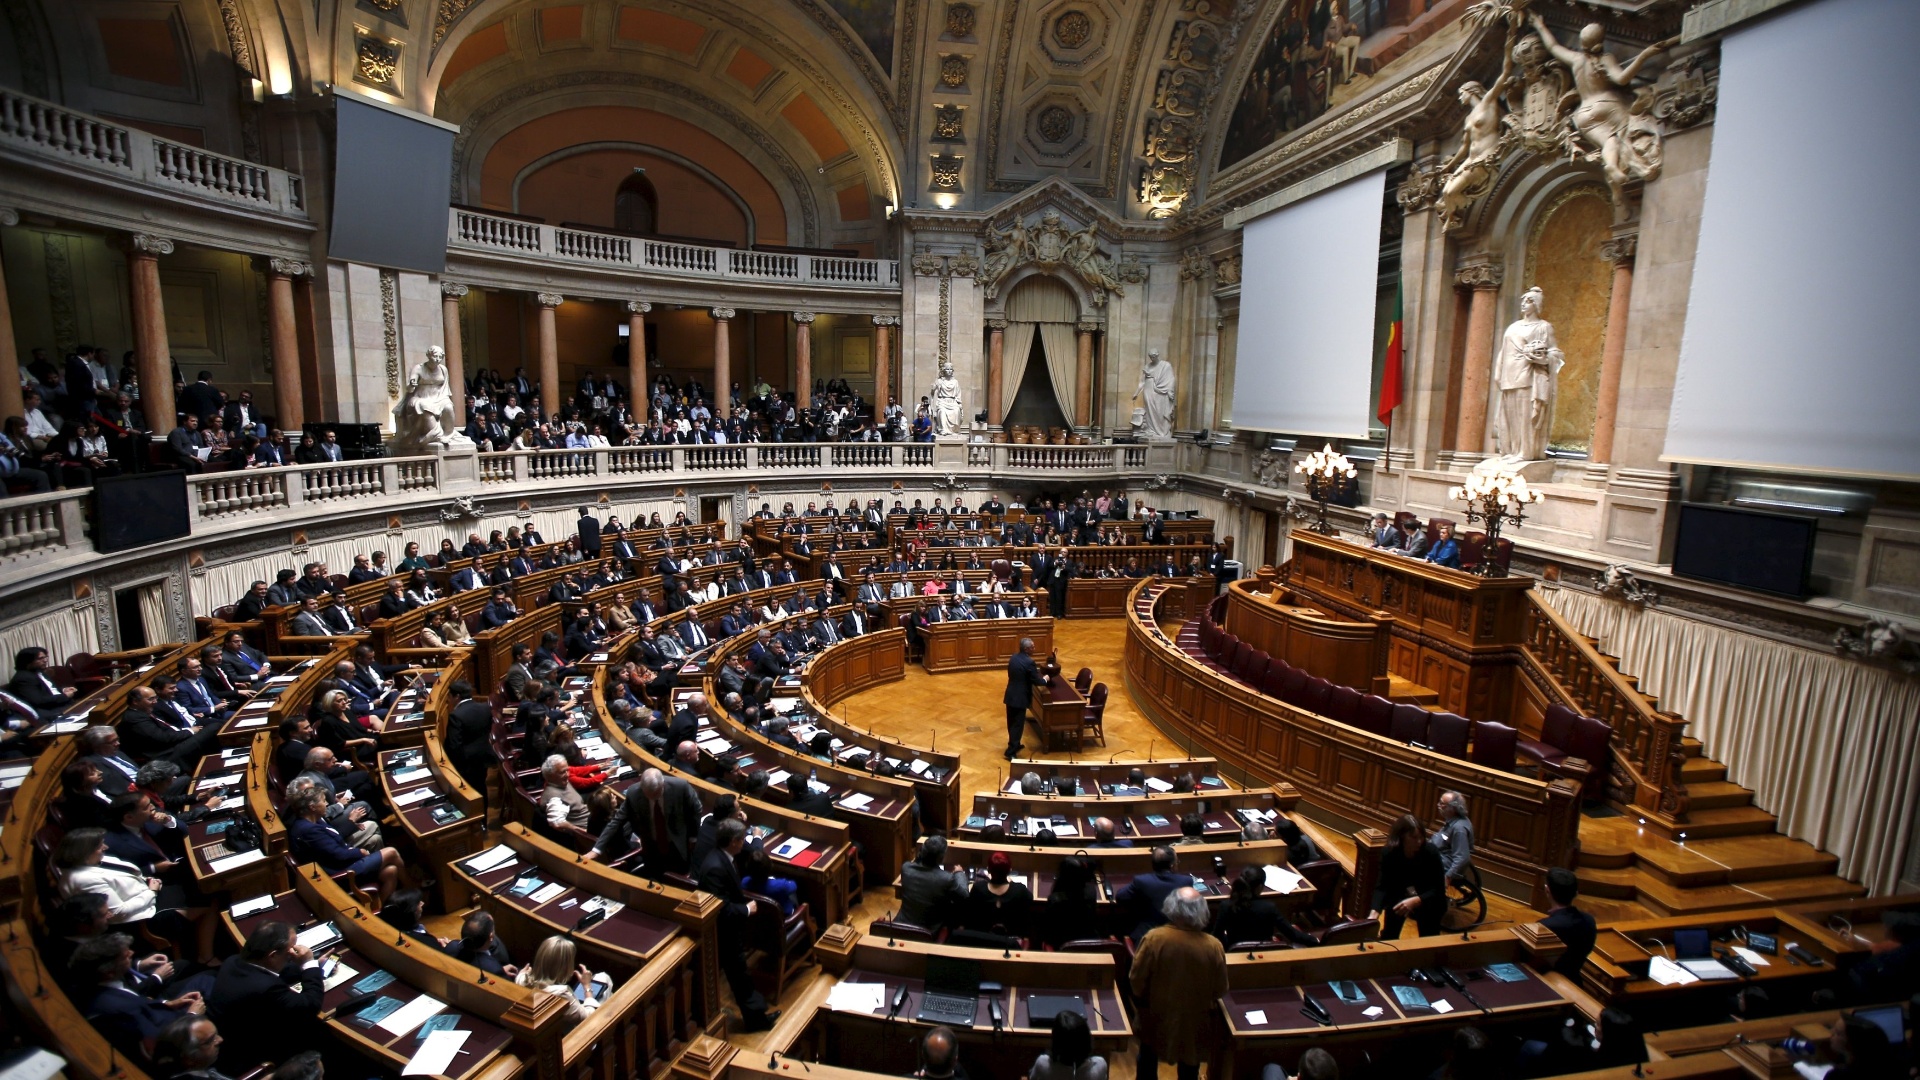 Республика ассамблеи. Ассамблея Республики Португалия. Парламент Португалии. Парламент в Лиссабоне. Правительство Португалии.